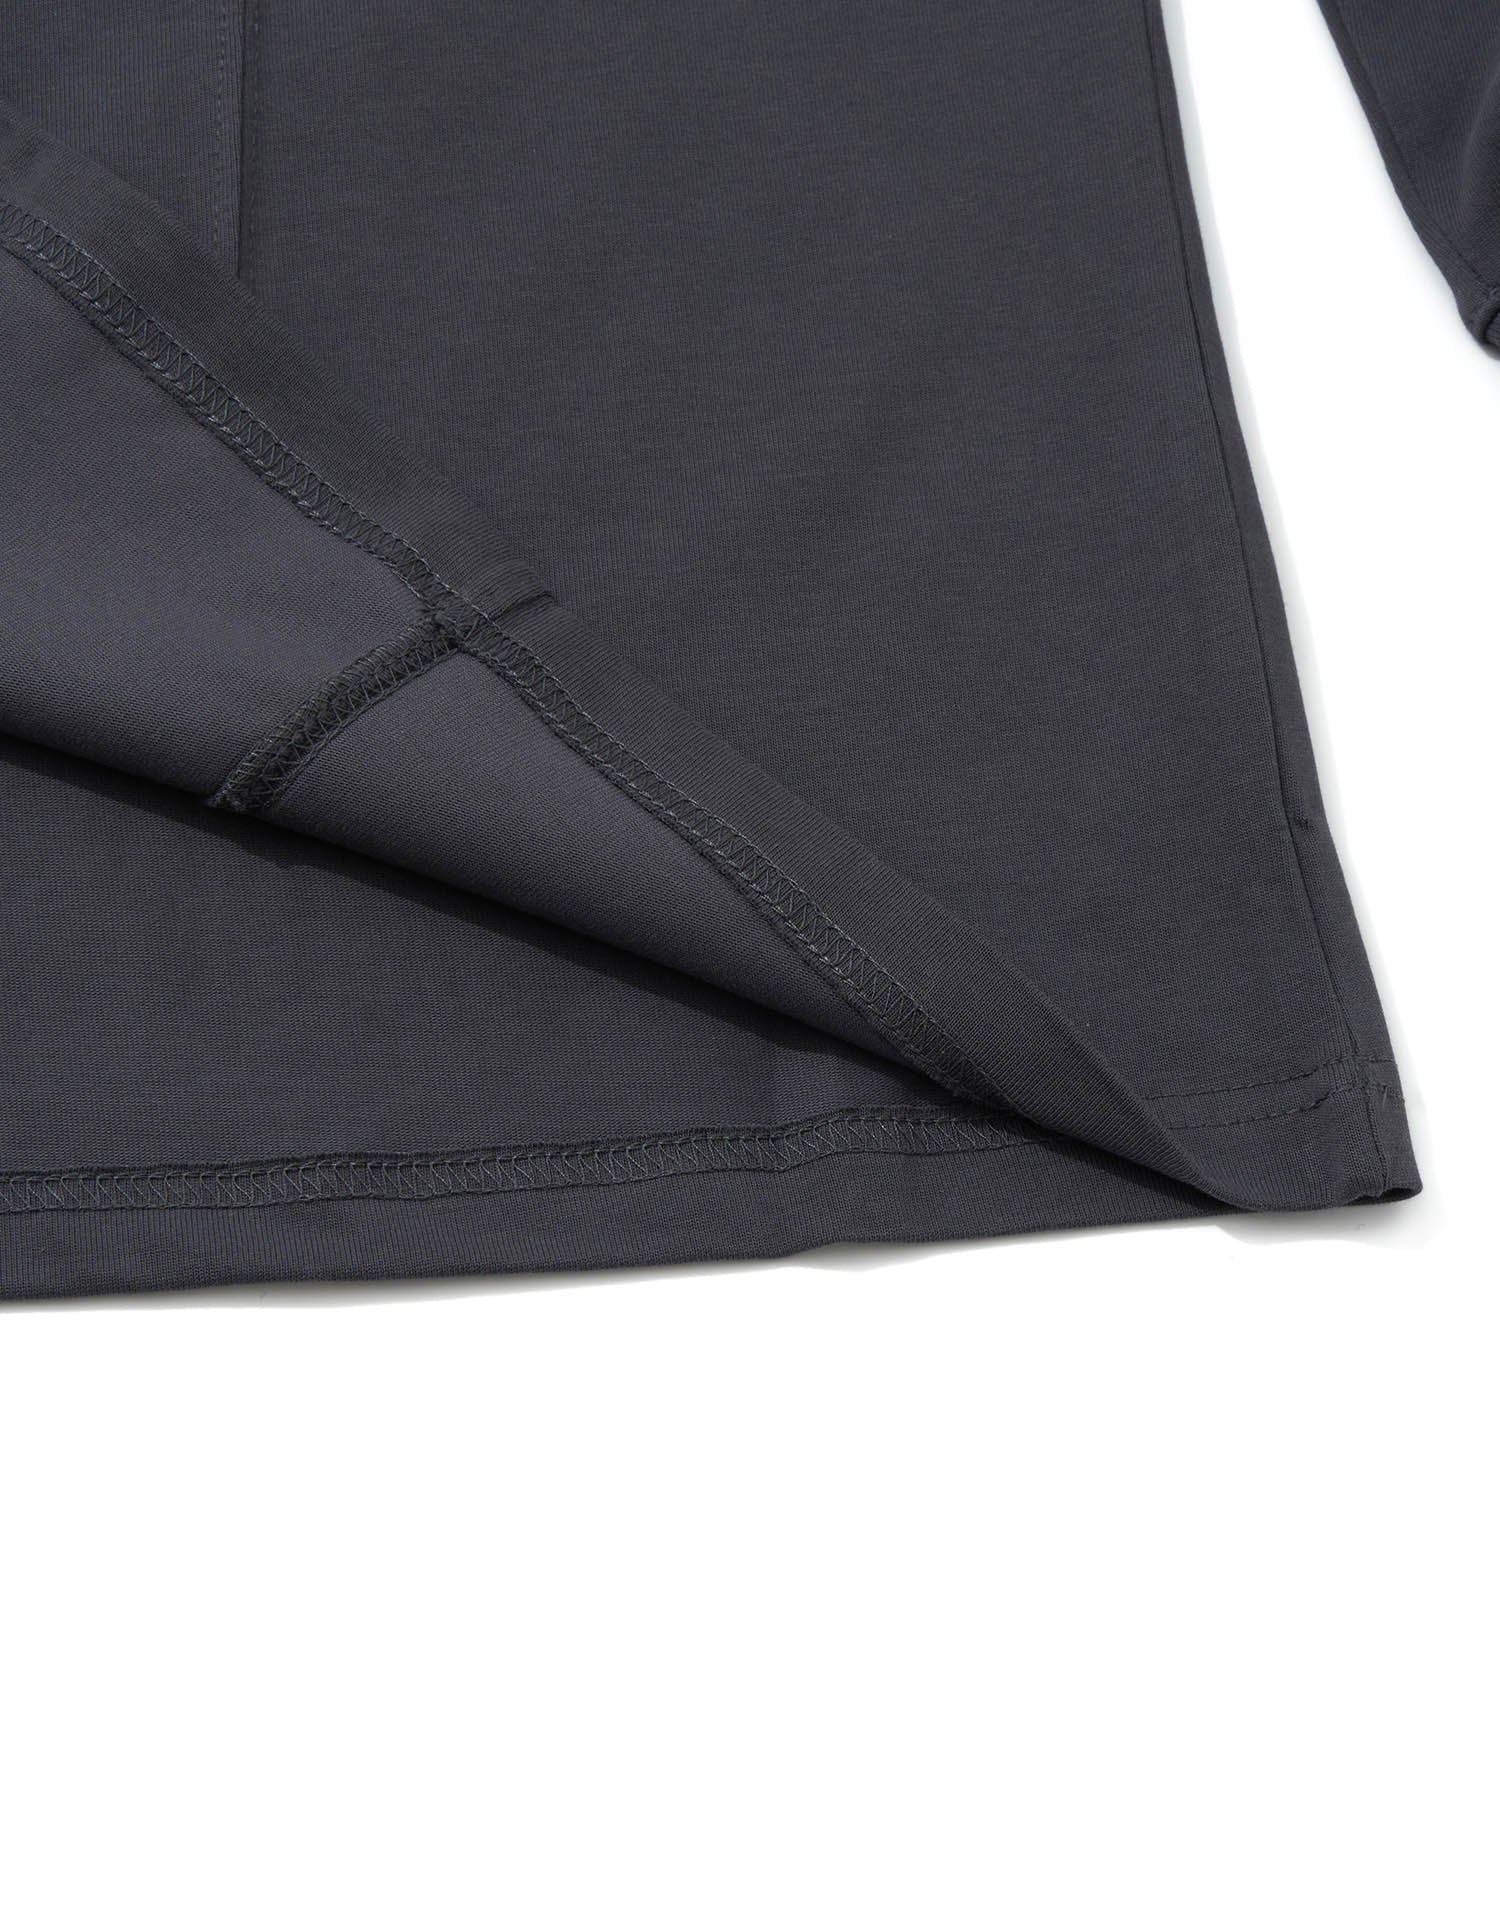 TopBasics Back & Forth Stitched Long Sleeve T-Shirt